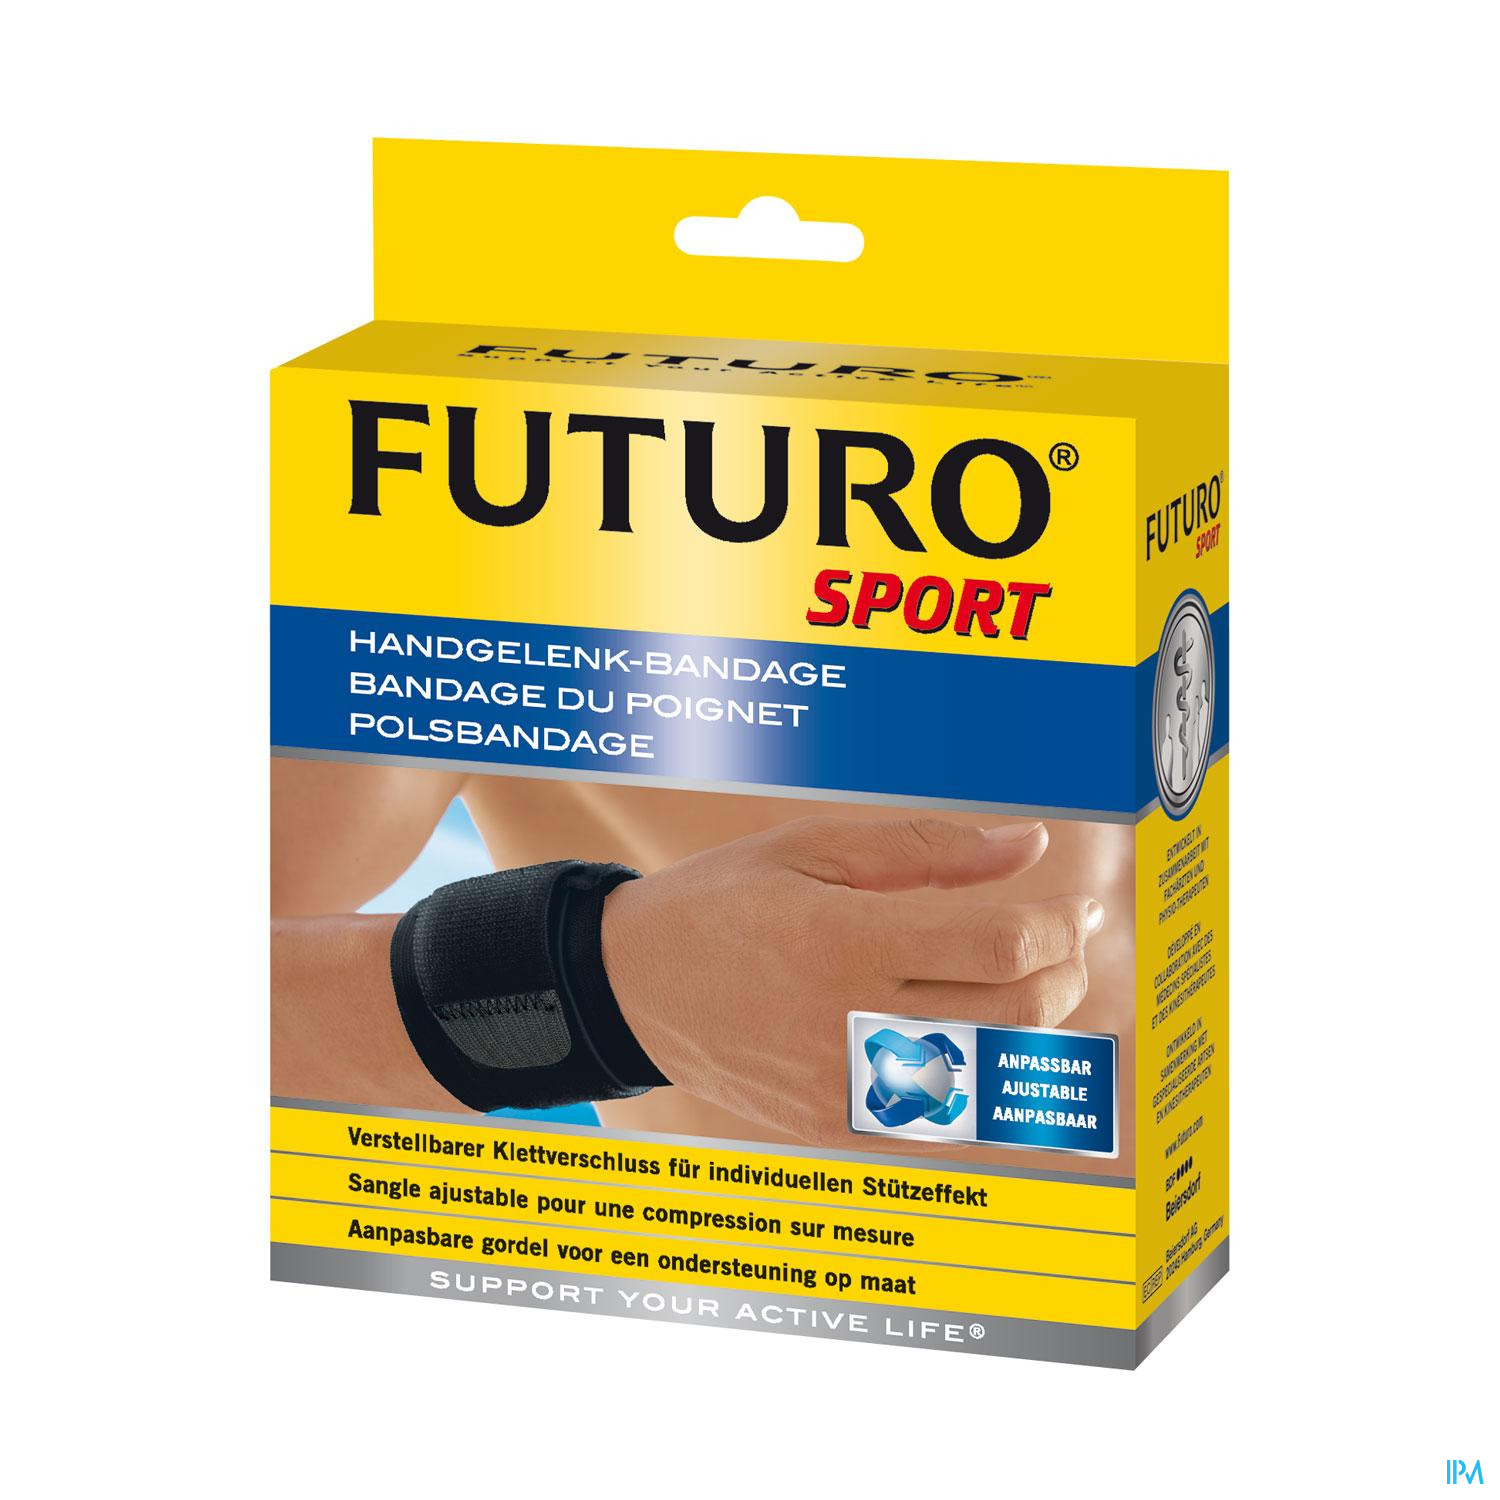 Futuro Sport Bandage Poignet 46378 - Apotheek Peeters Oudsbergen (Peeters  Pharma BV)